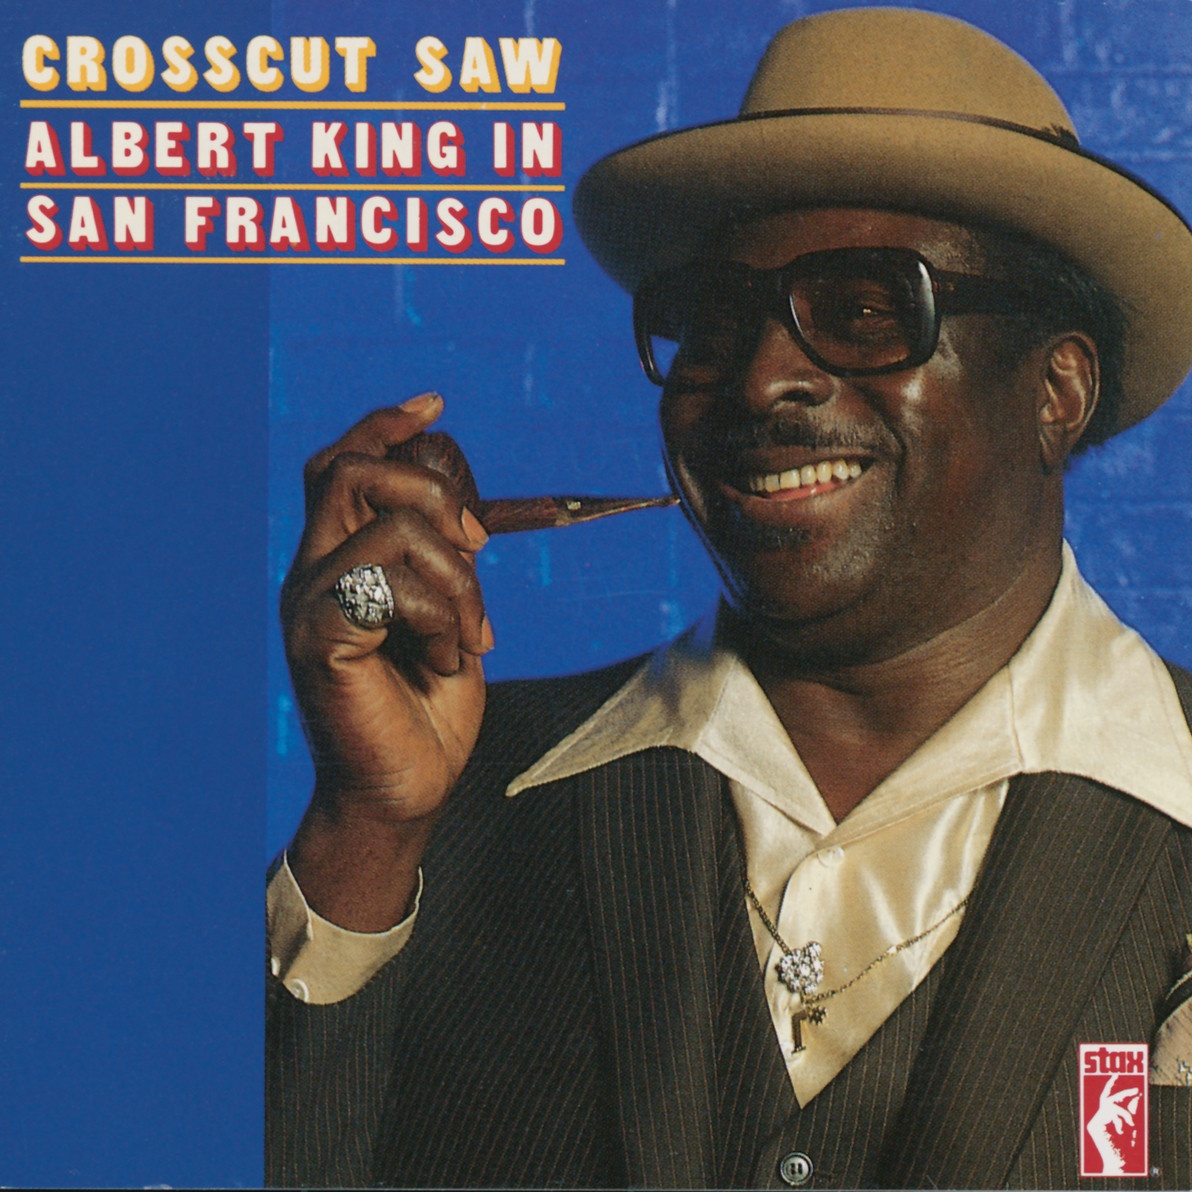 Crosscut Saw: Albert King In San Francisco